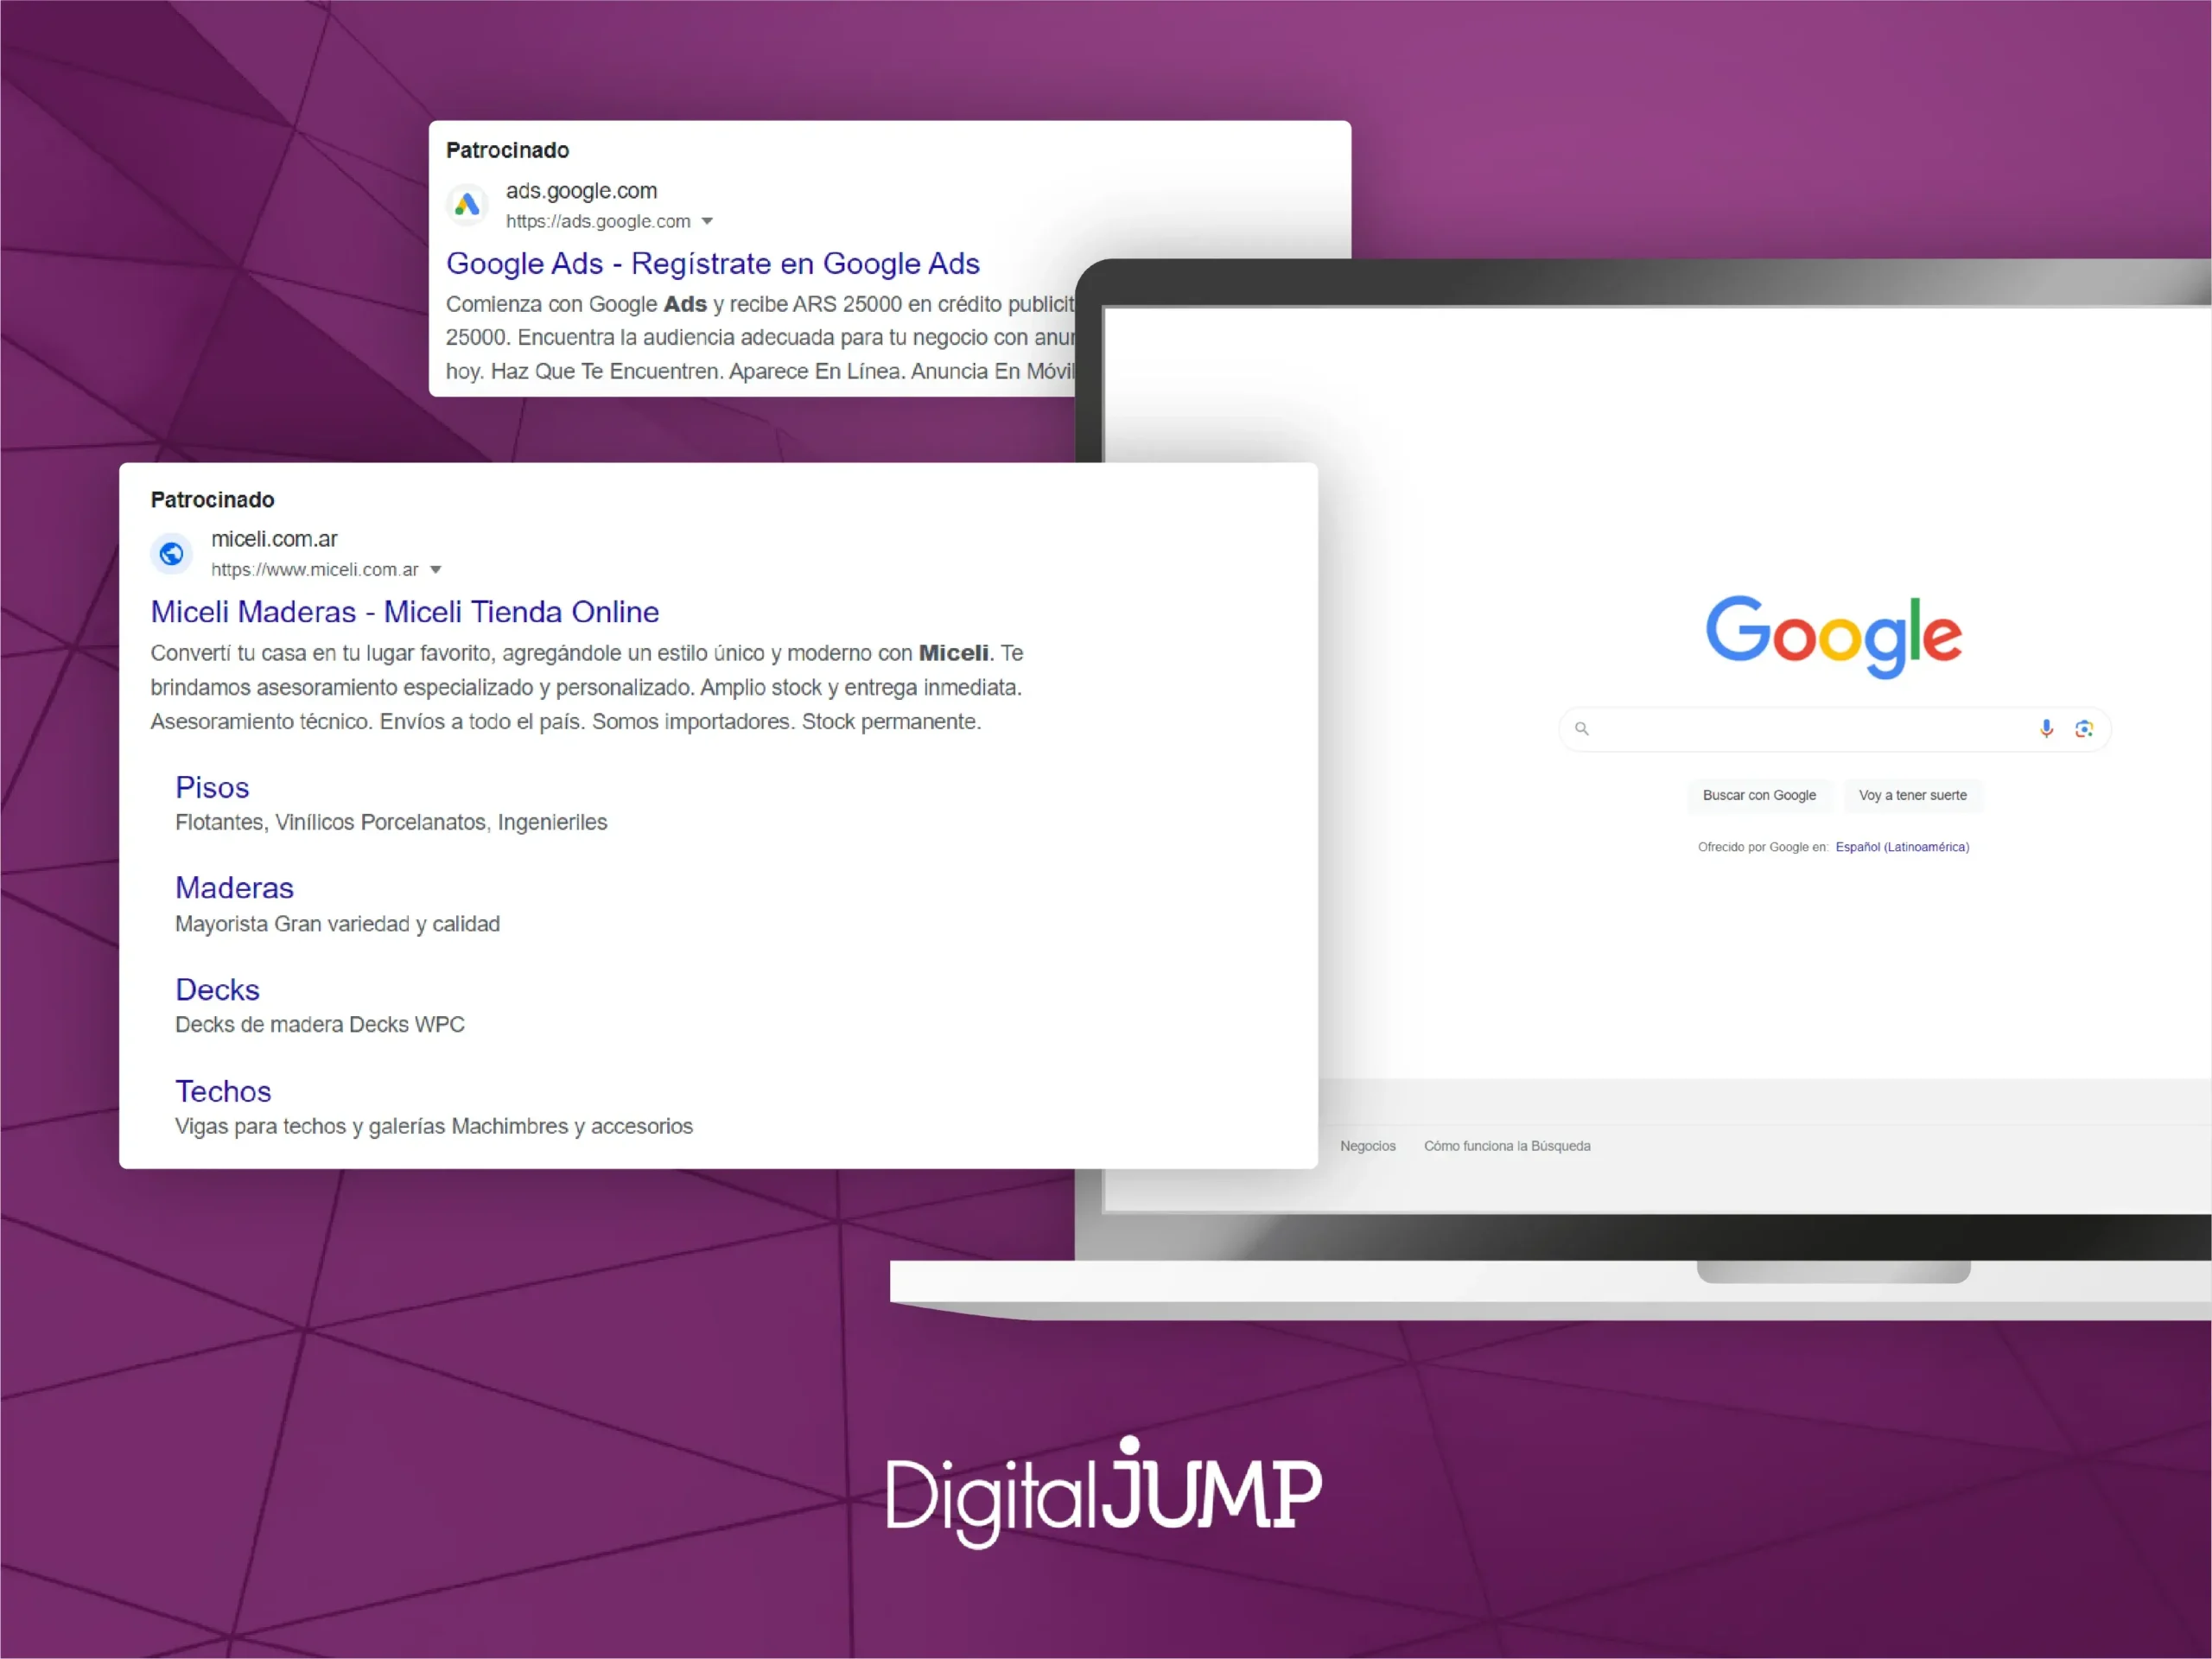 Google Ads - by Digital Jump